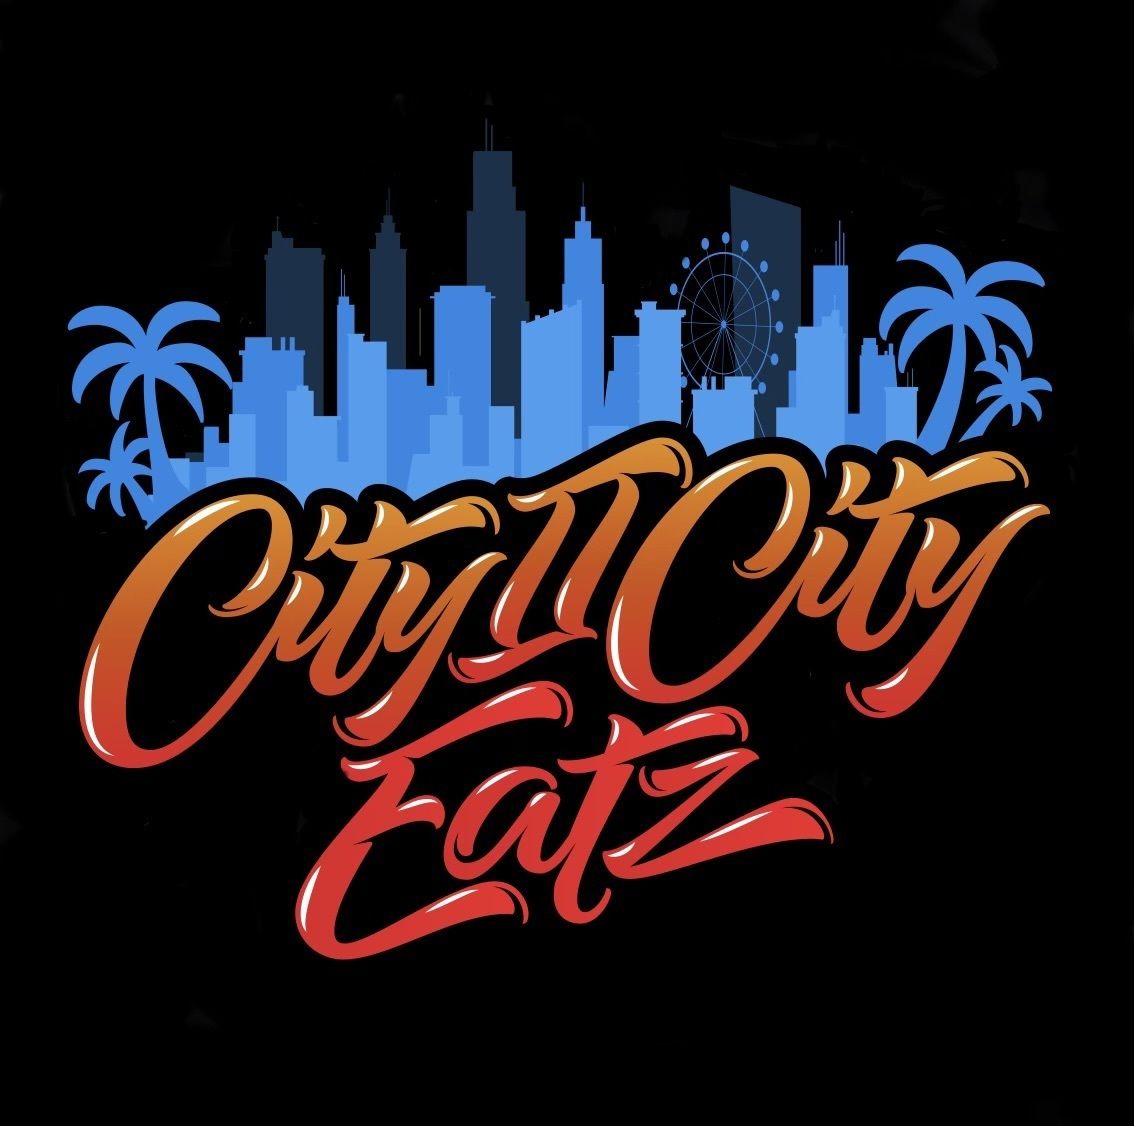 City II City Eatz